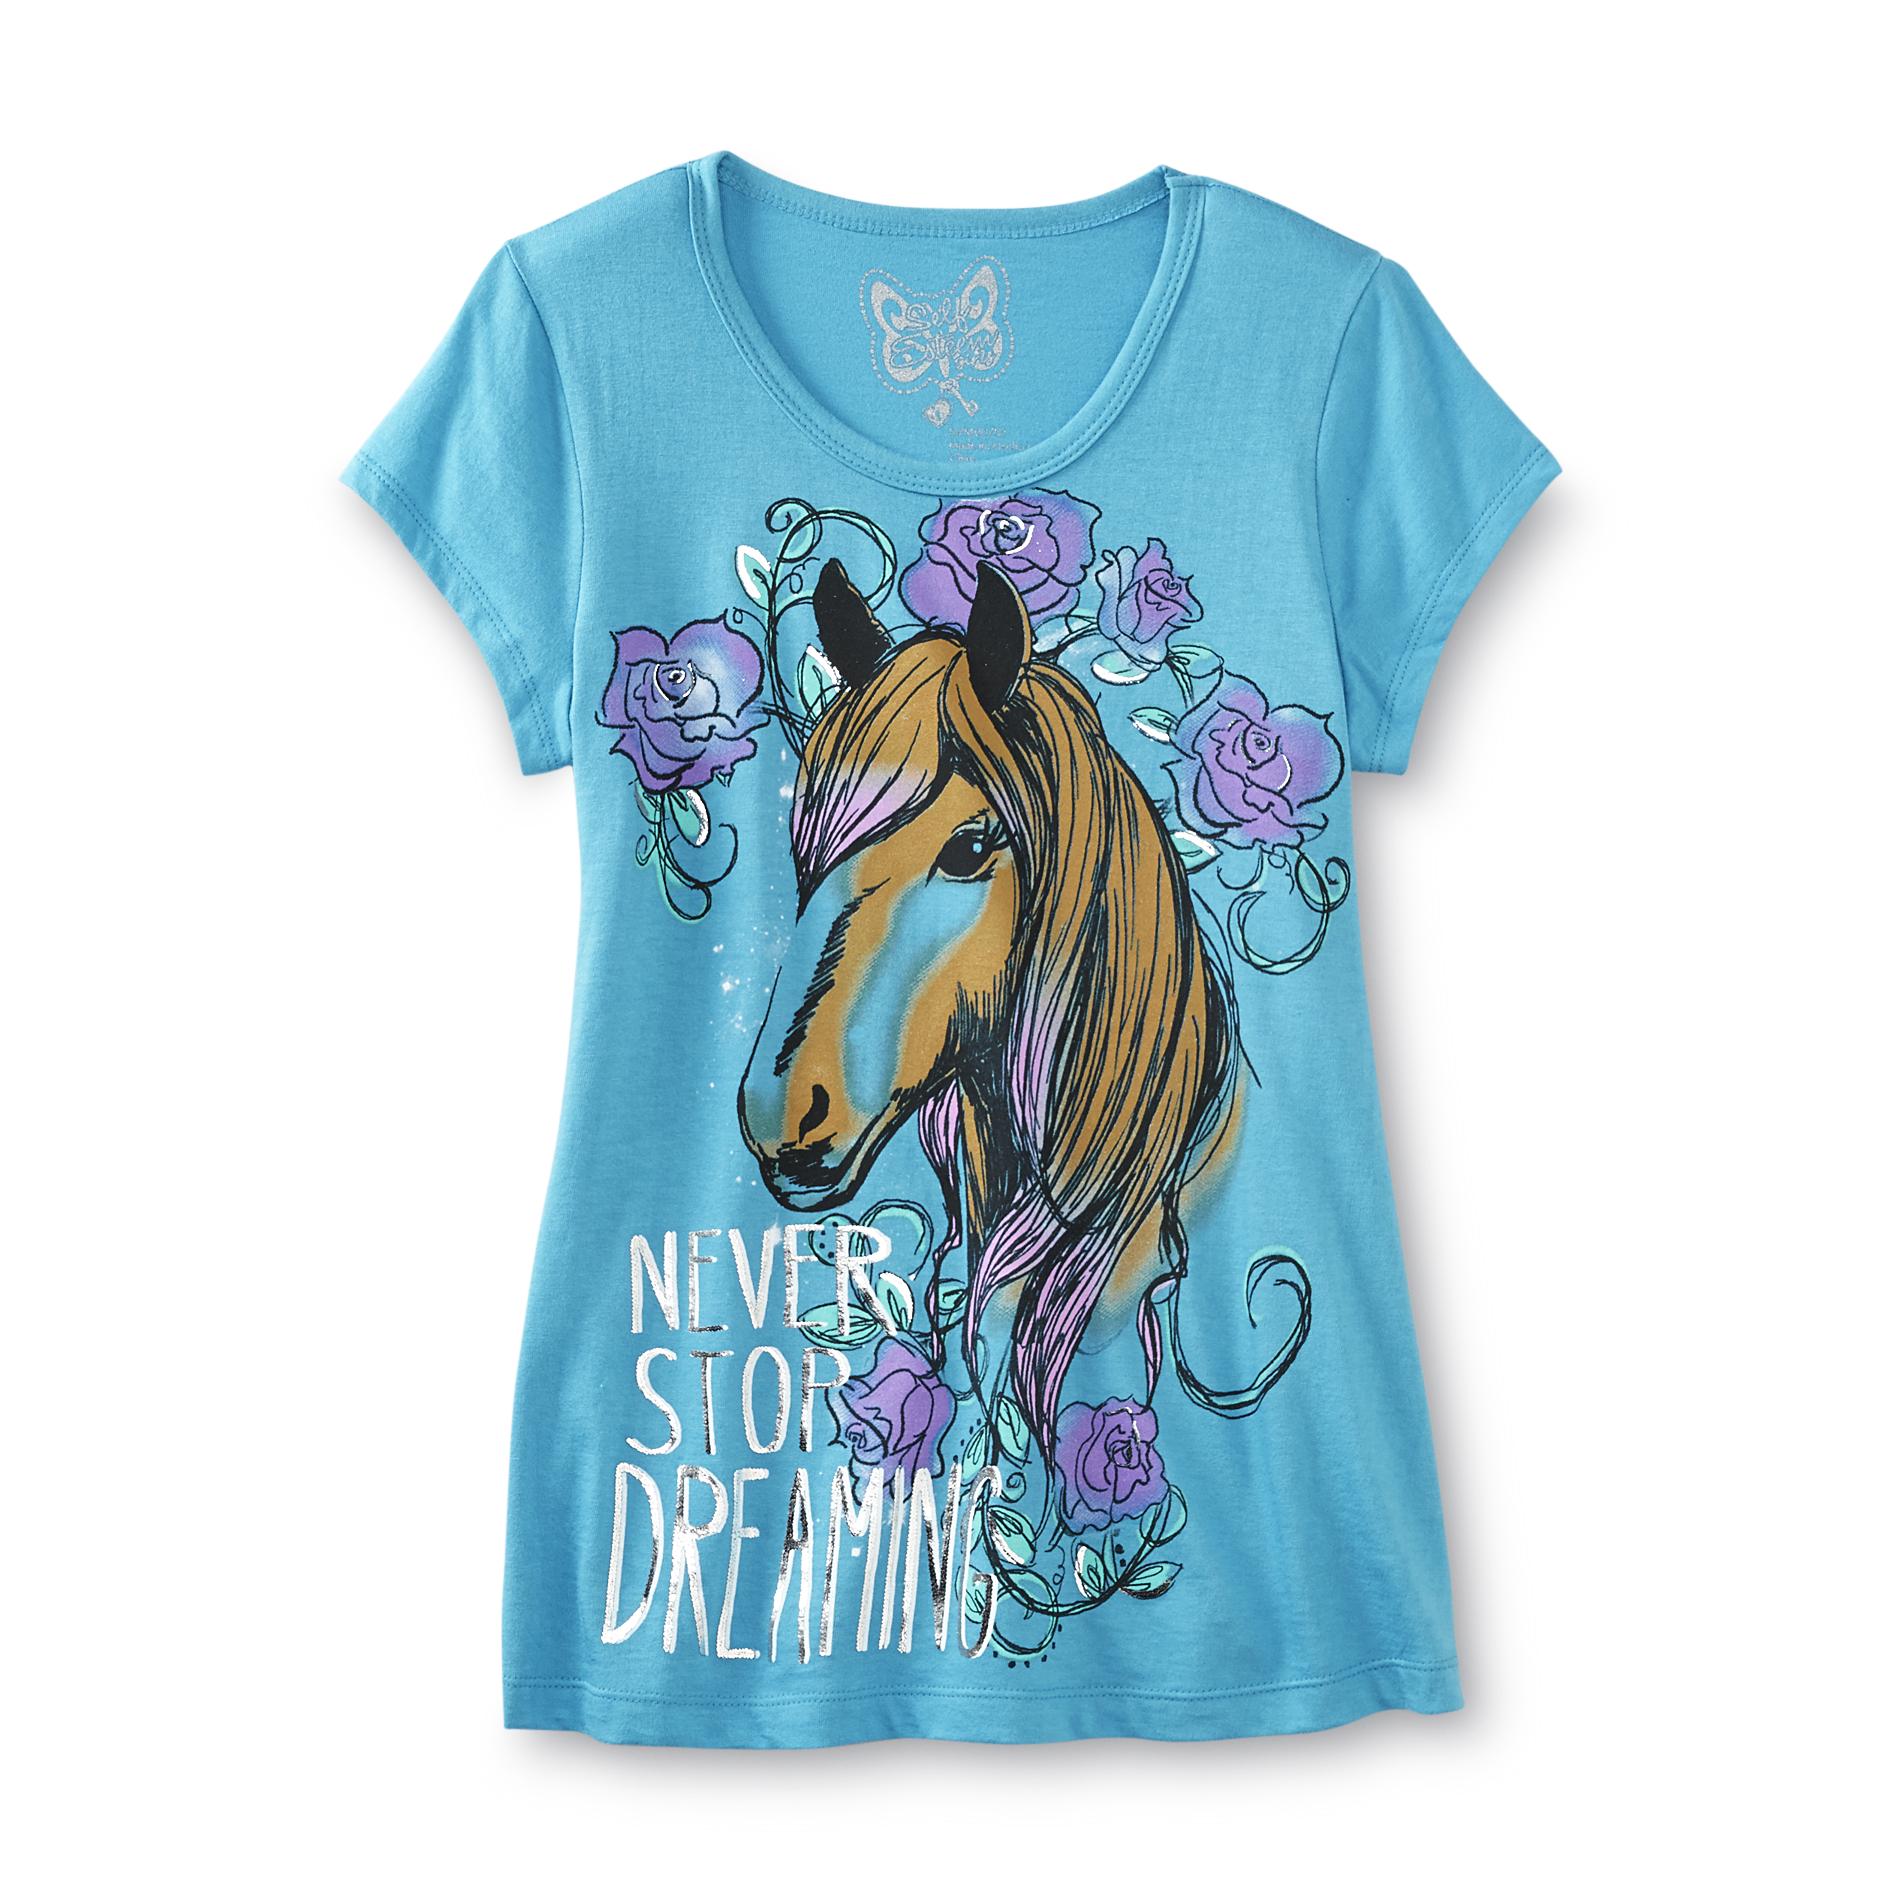 Self Esteem Girl's Graphic T-Shirt - Horse